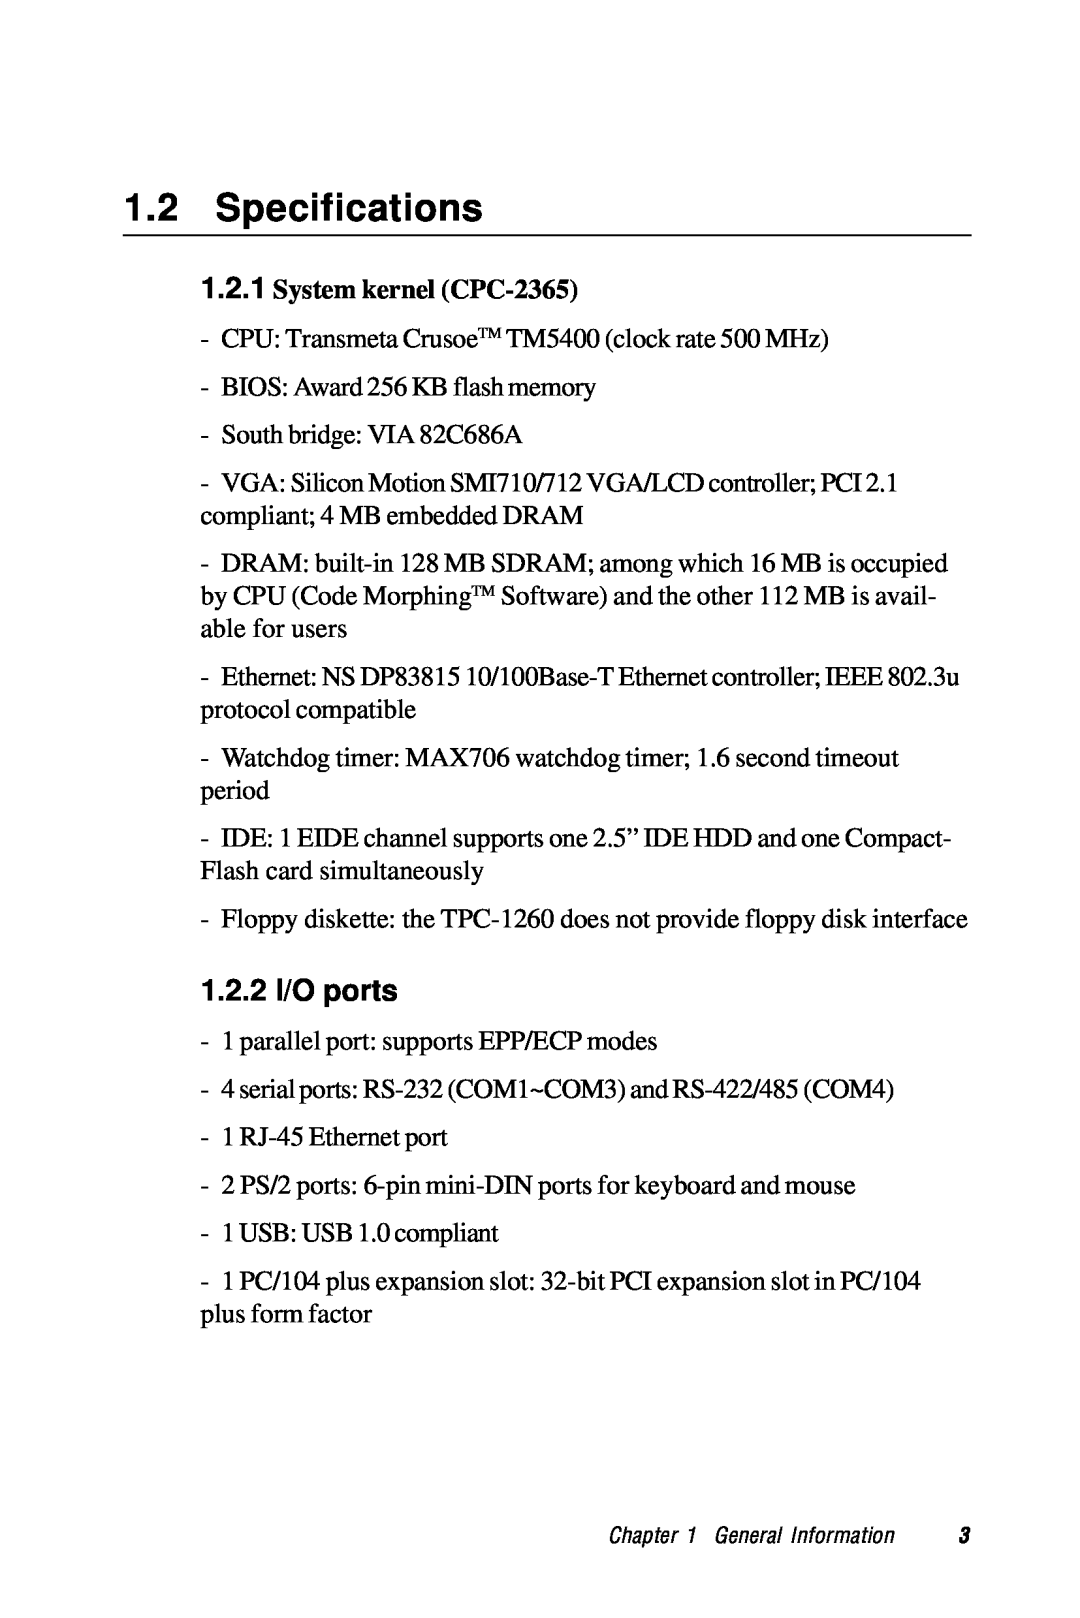 Advantech TPC-1260 manual Specifications, 1.2.2 I/O ports 